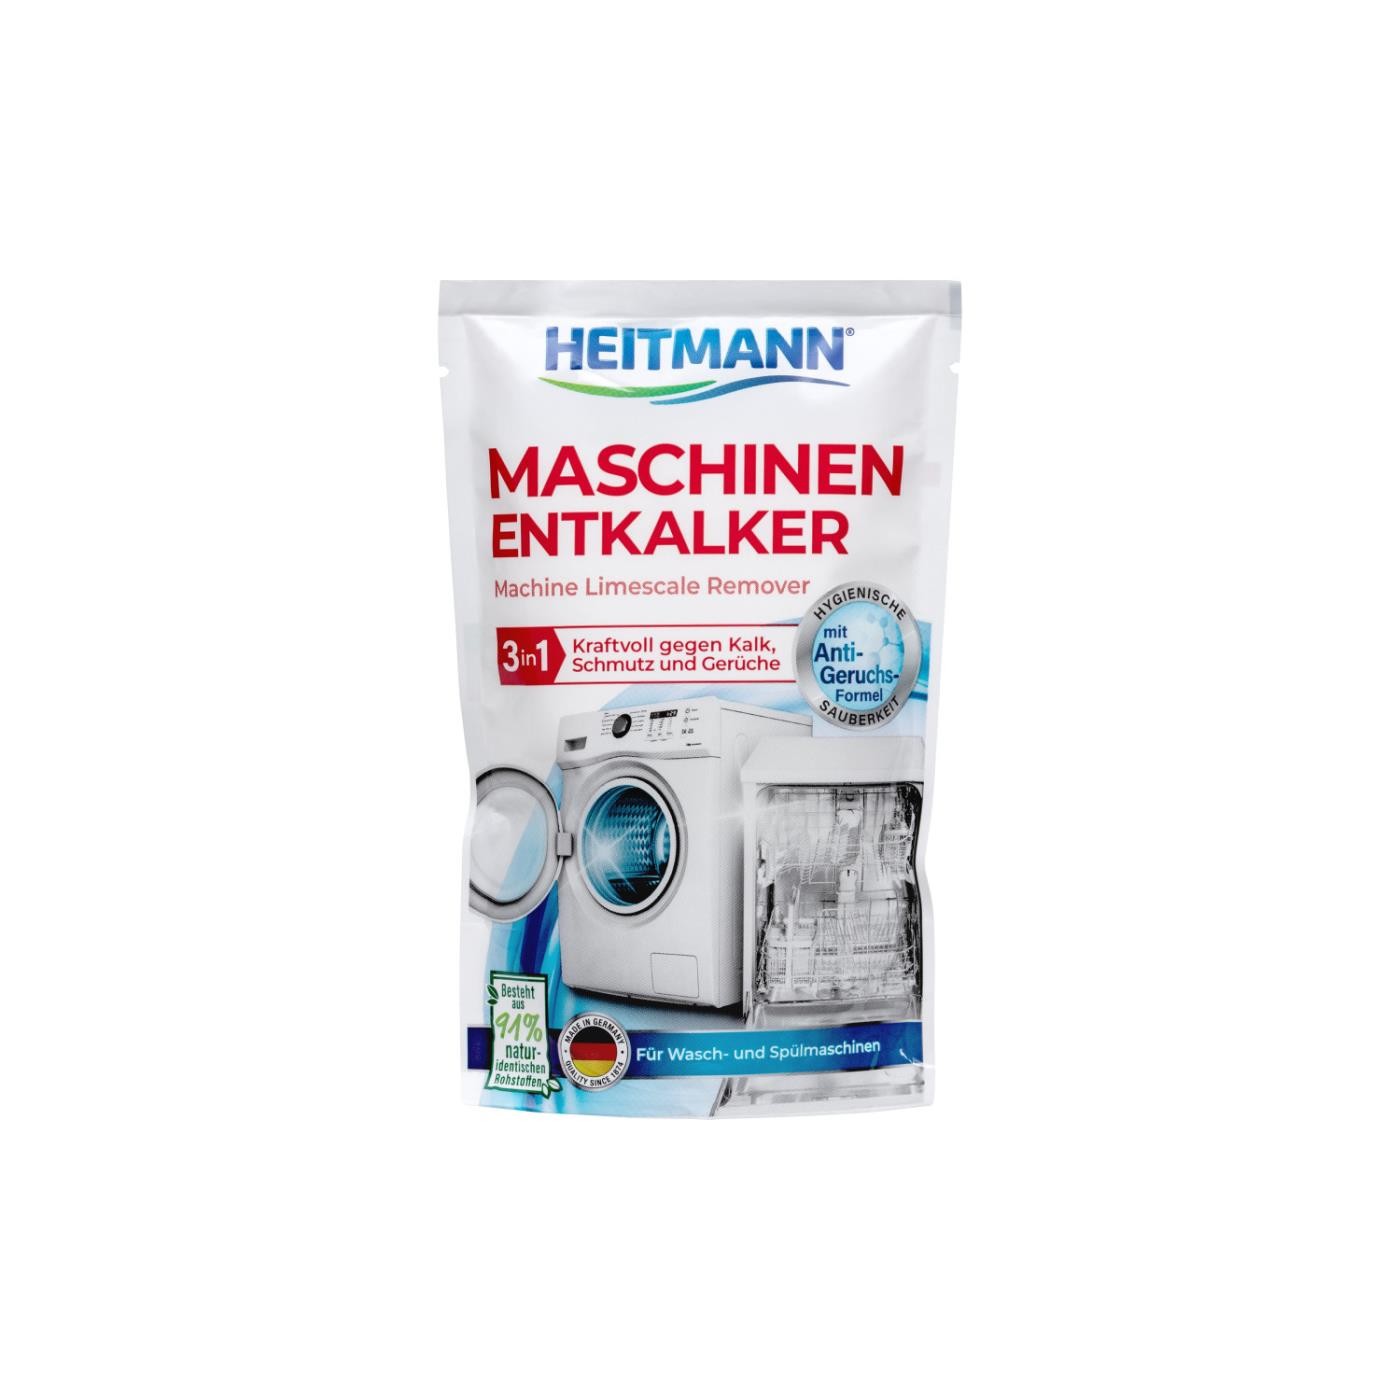 Heitmann Maschinen Entkalker 175g 3in1